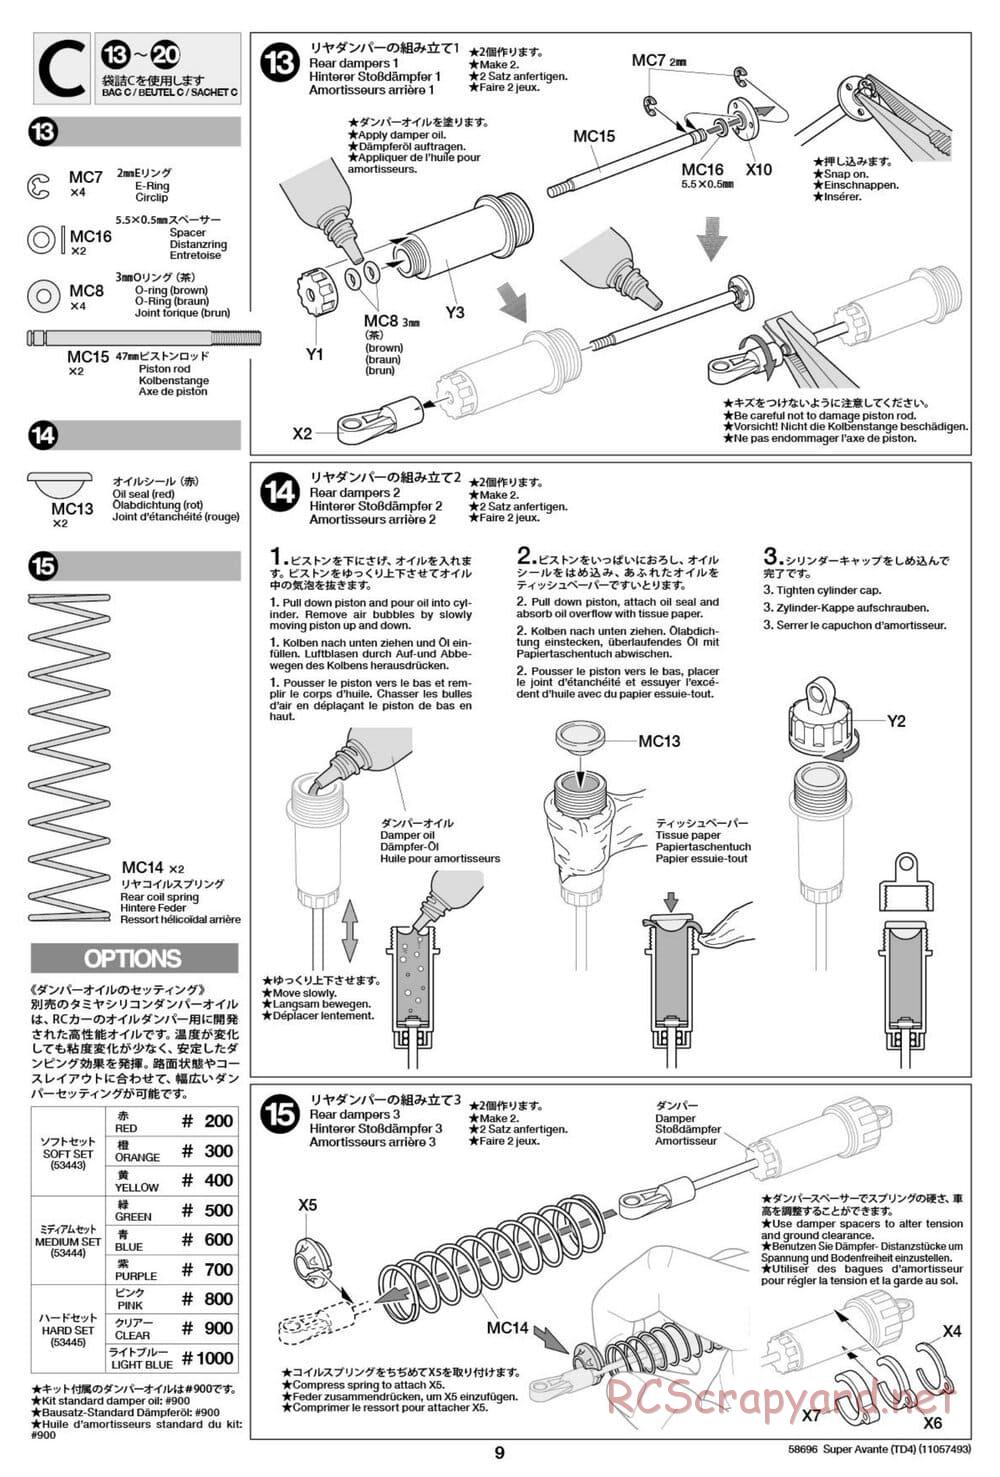 Tamiya - Super Avante - TD4 Chassis - Manual - Page 10